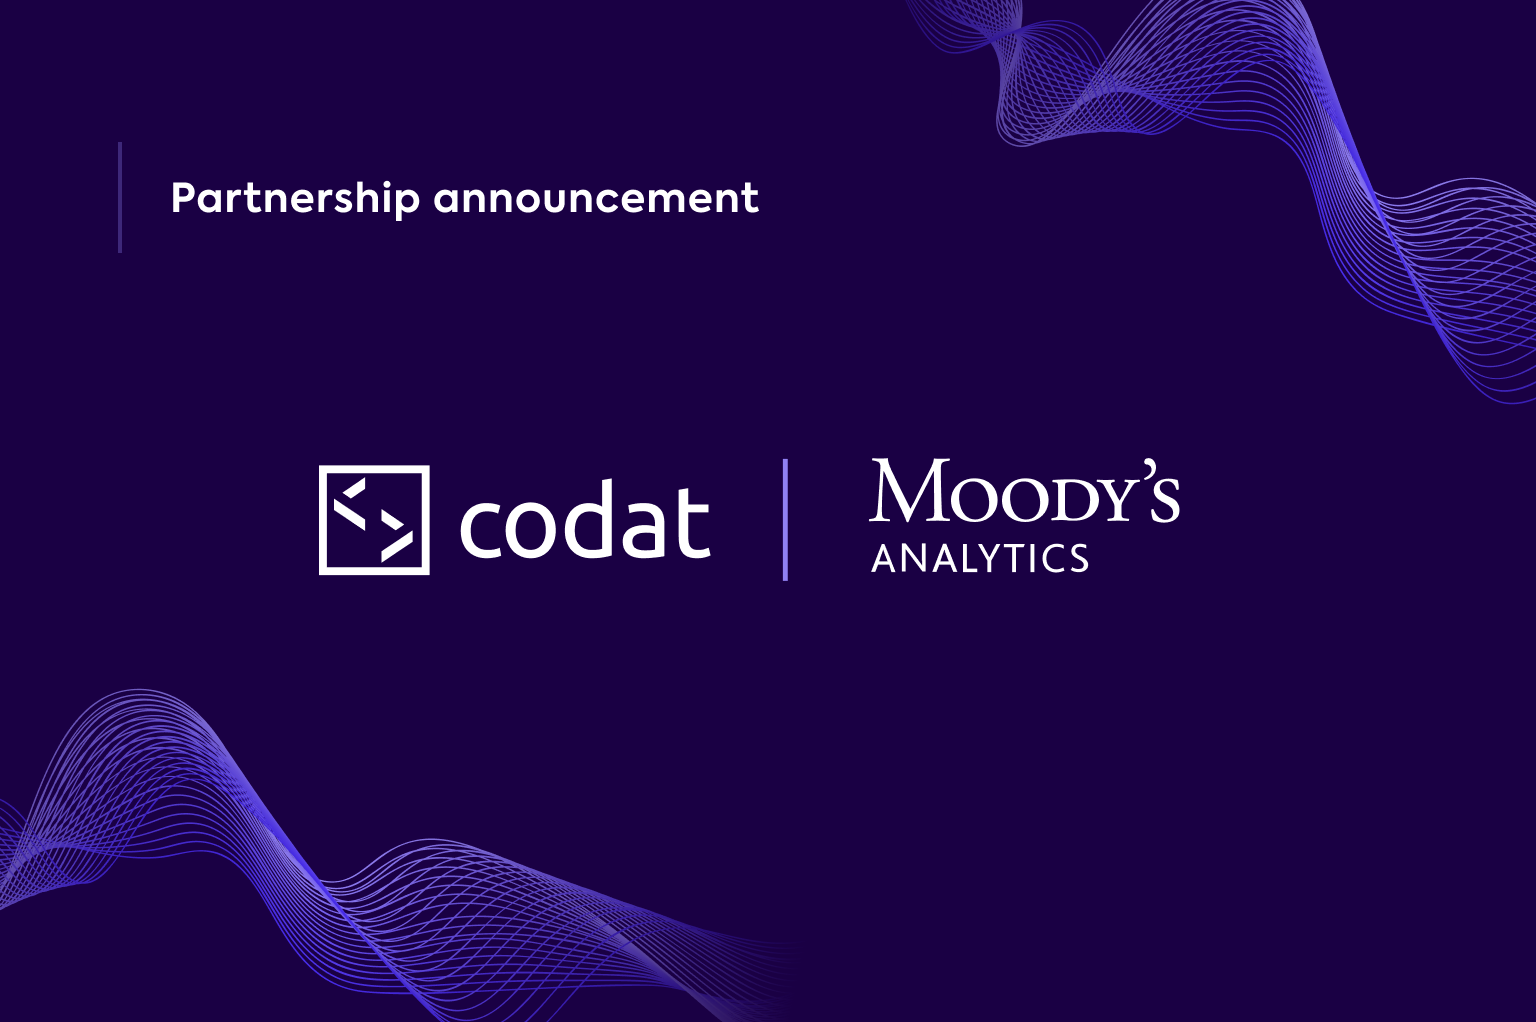 Codat partners with Moody's Analytics